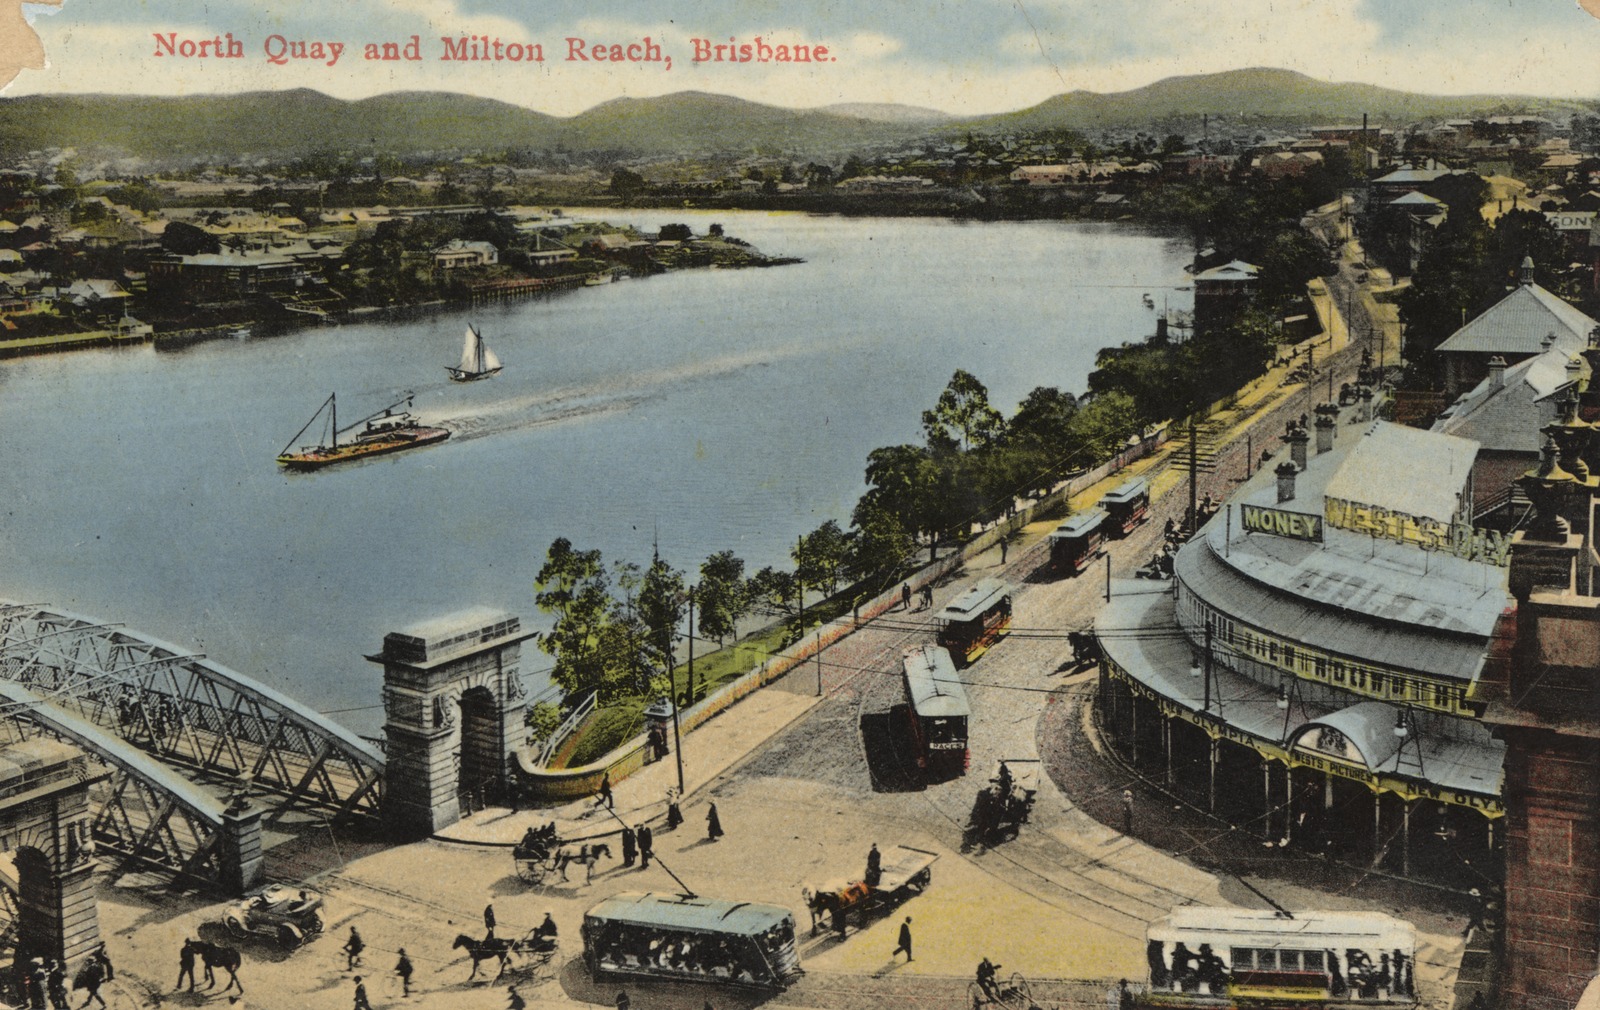 North Quay and Milton Reach of the Brisbane River